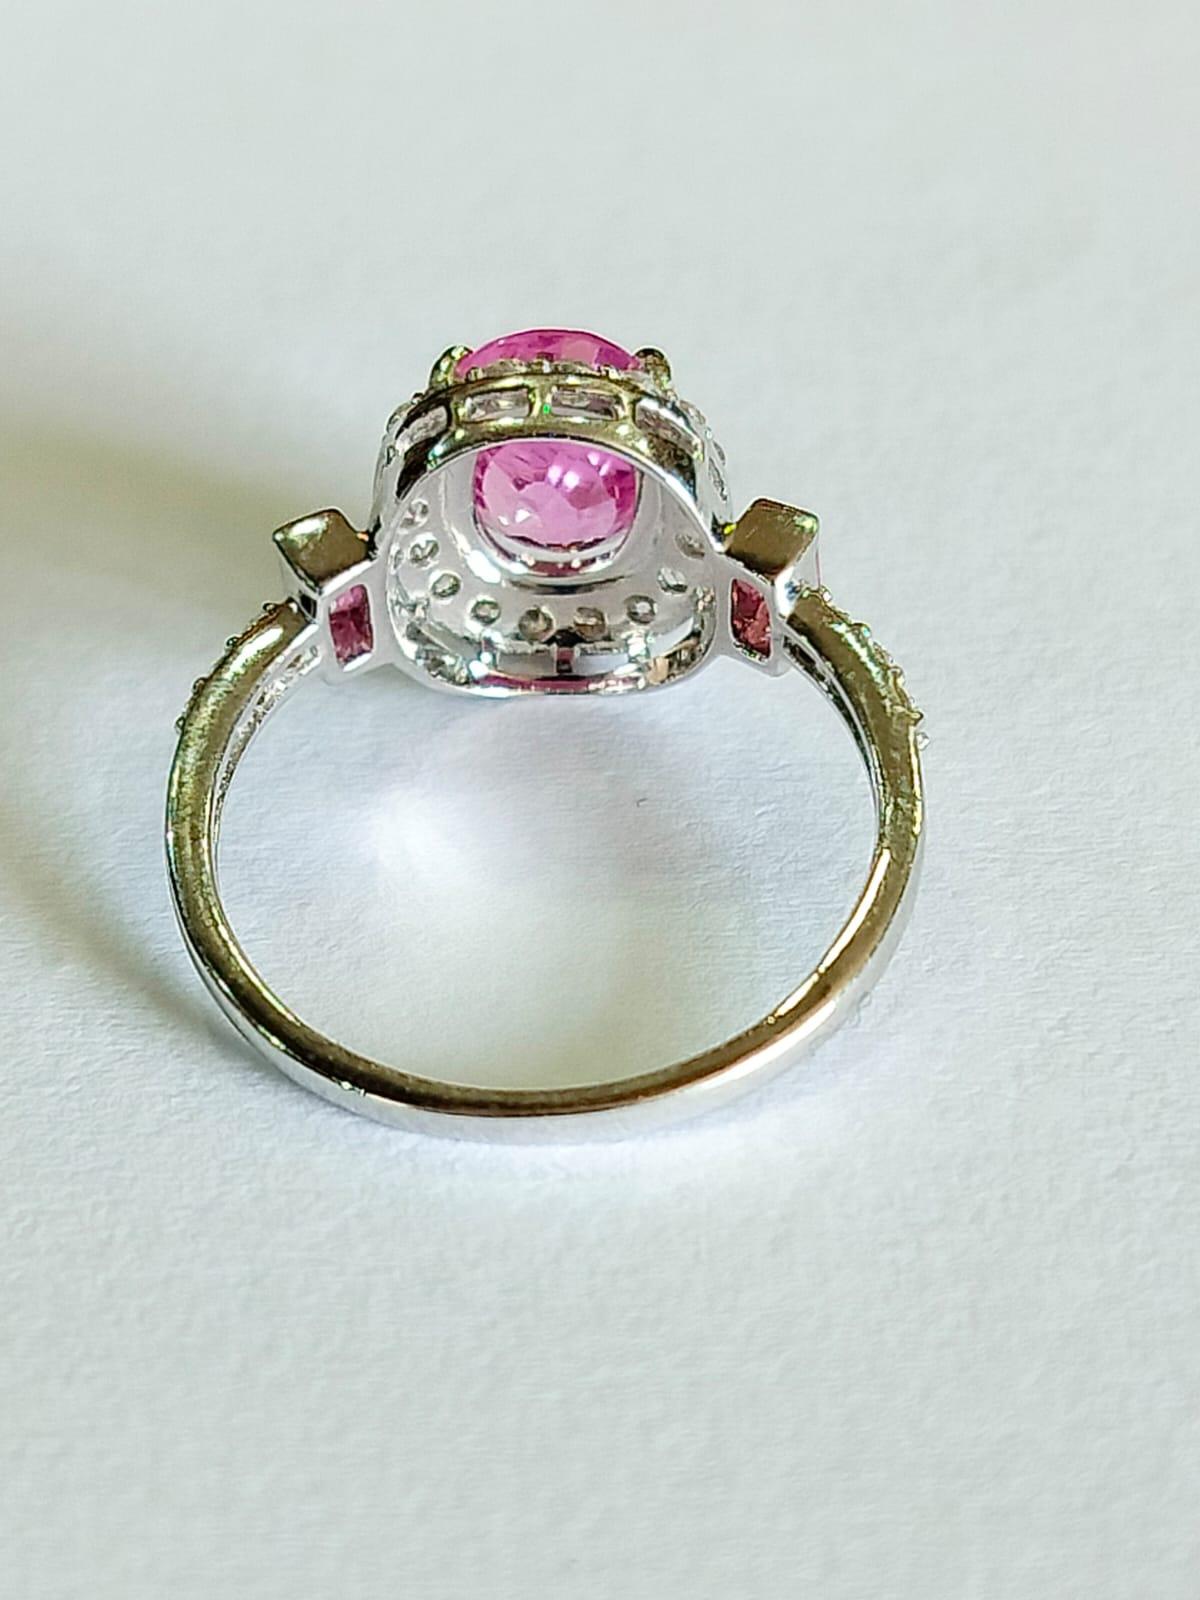 Women's Set in 18K Gold, 2.32 carats, Ceylon Pink Sapphires & Diamonds Engagement Ring 